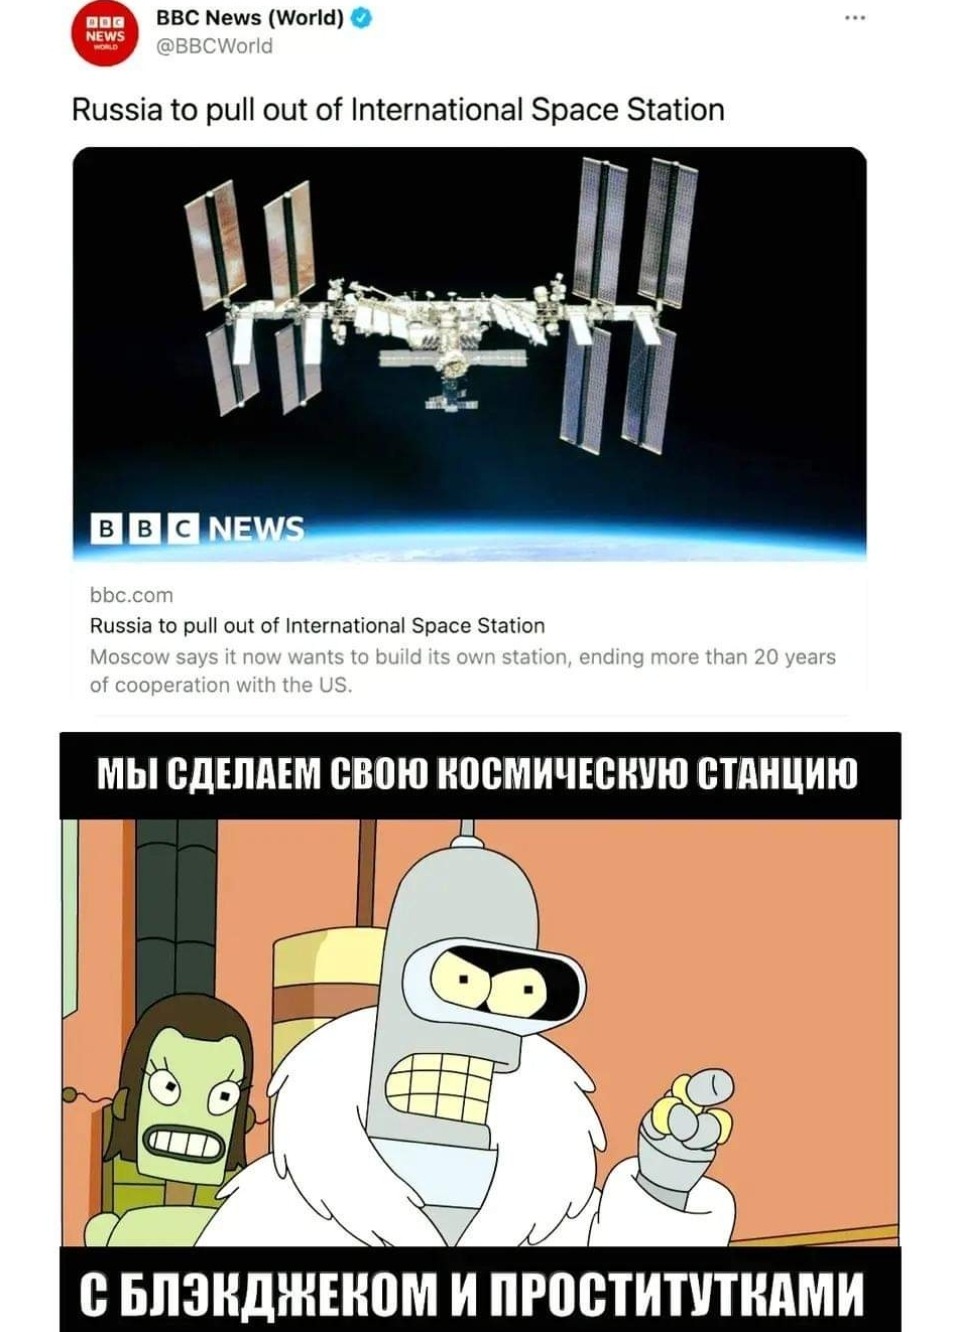 ISS - meme